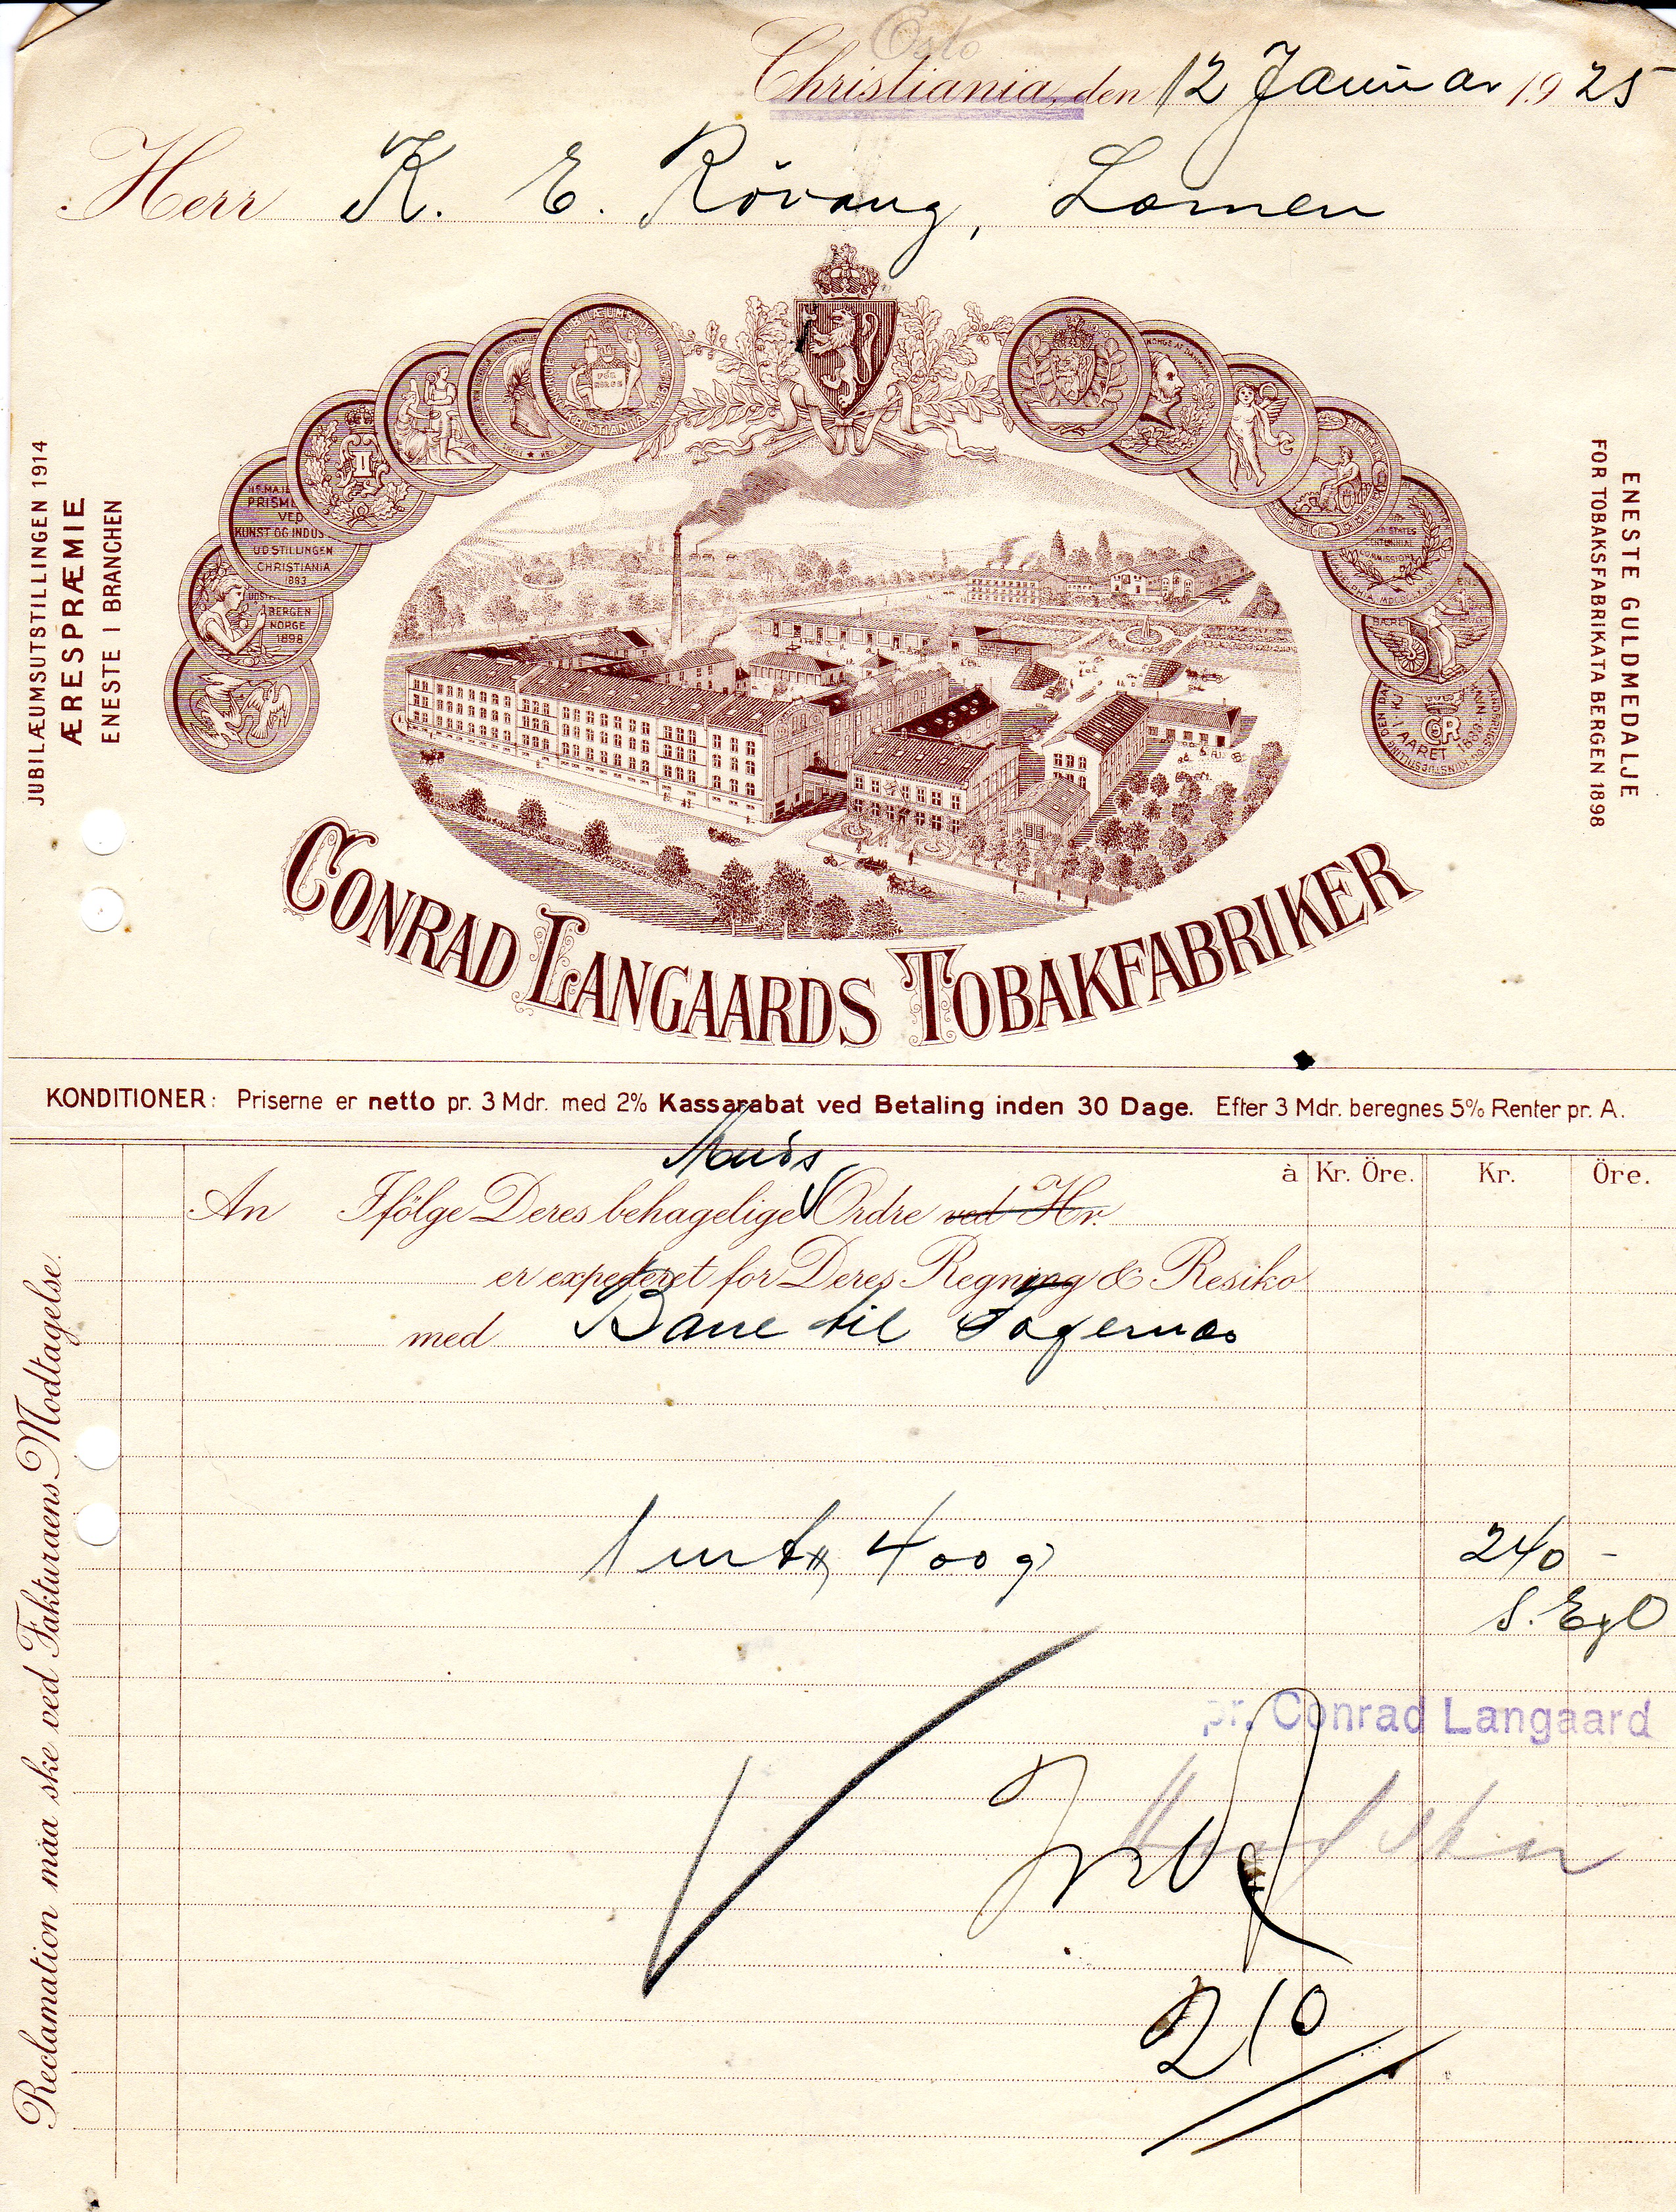 Conrad Langaards Tobakfabriker 1921/1919/1921/1921/1925/1921/1921 pris pr stk